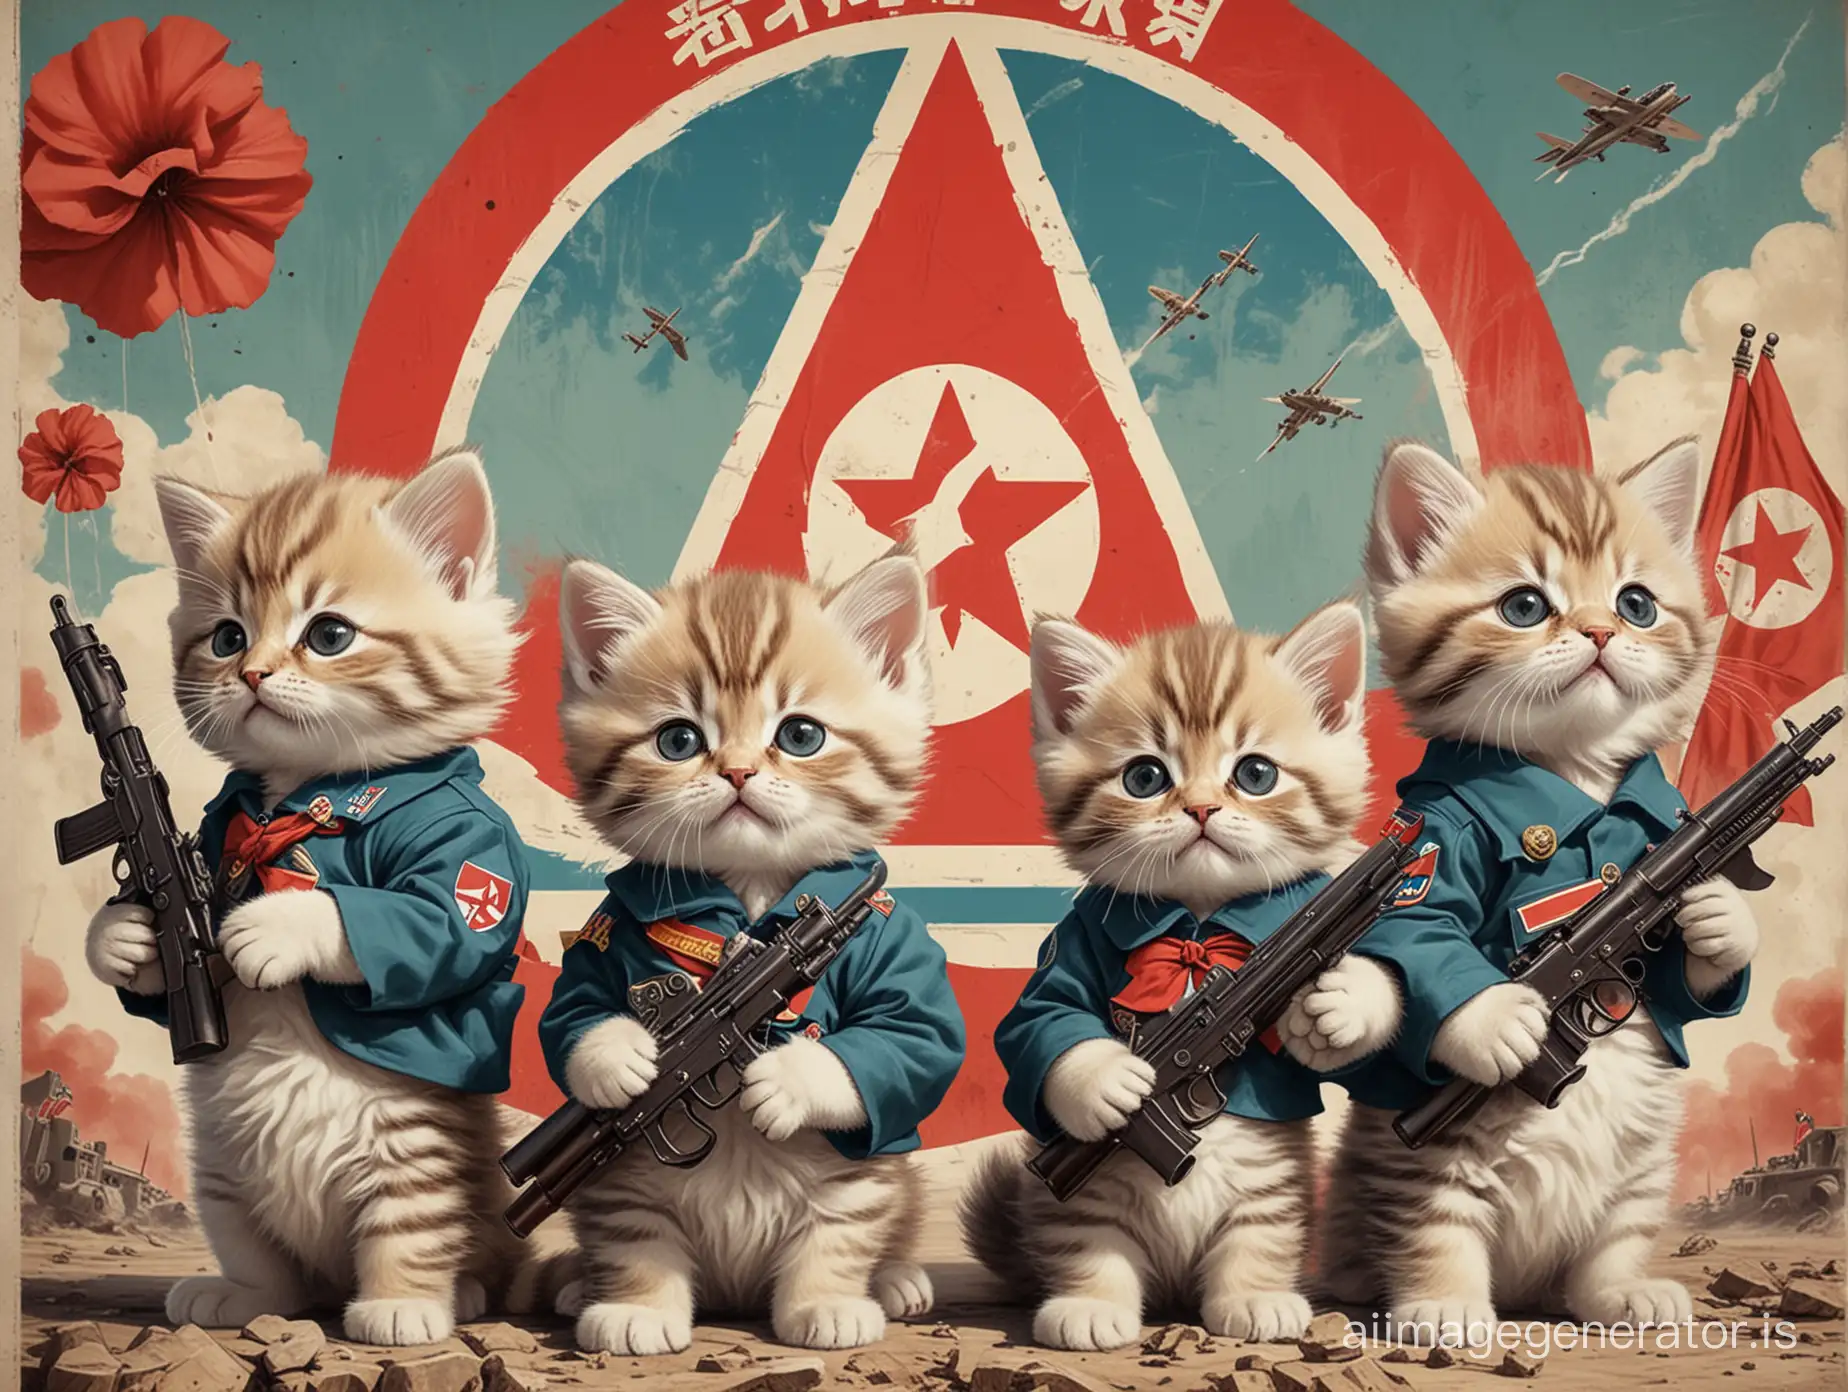 Kittens-in-Uniforms-with-Guns-and-Mushroom-Cloud-North-Korean-Propaganda-Art